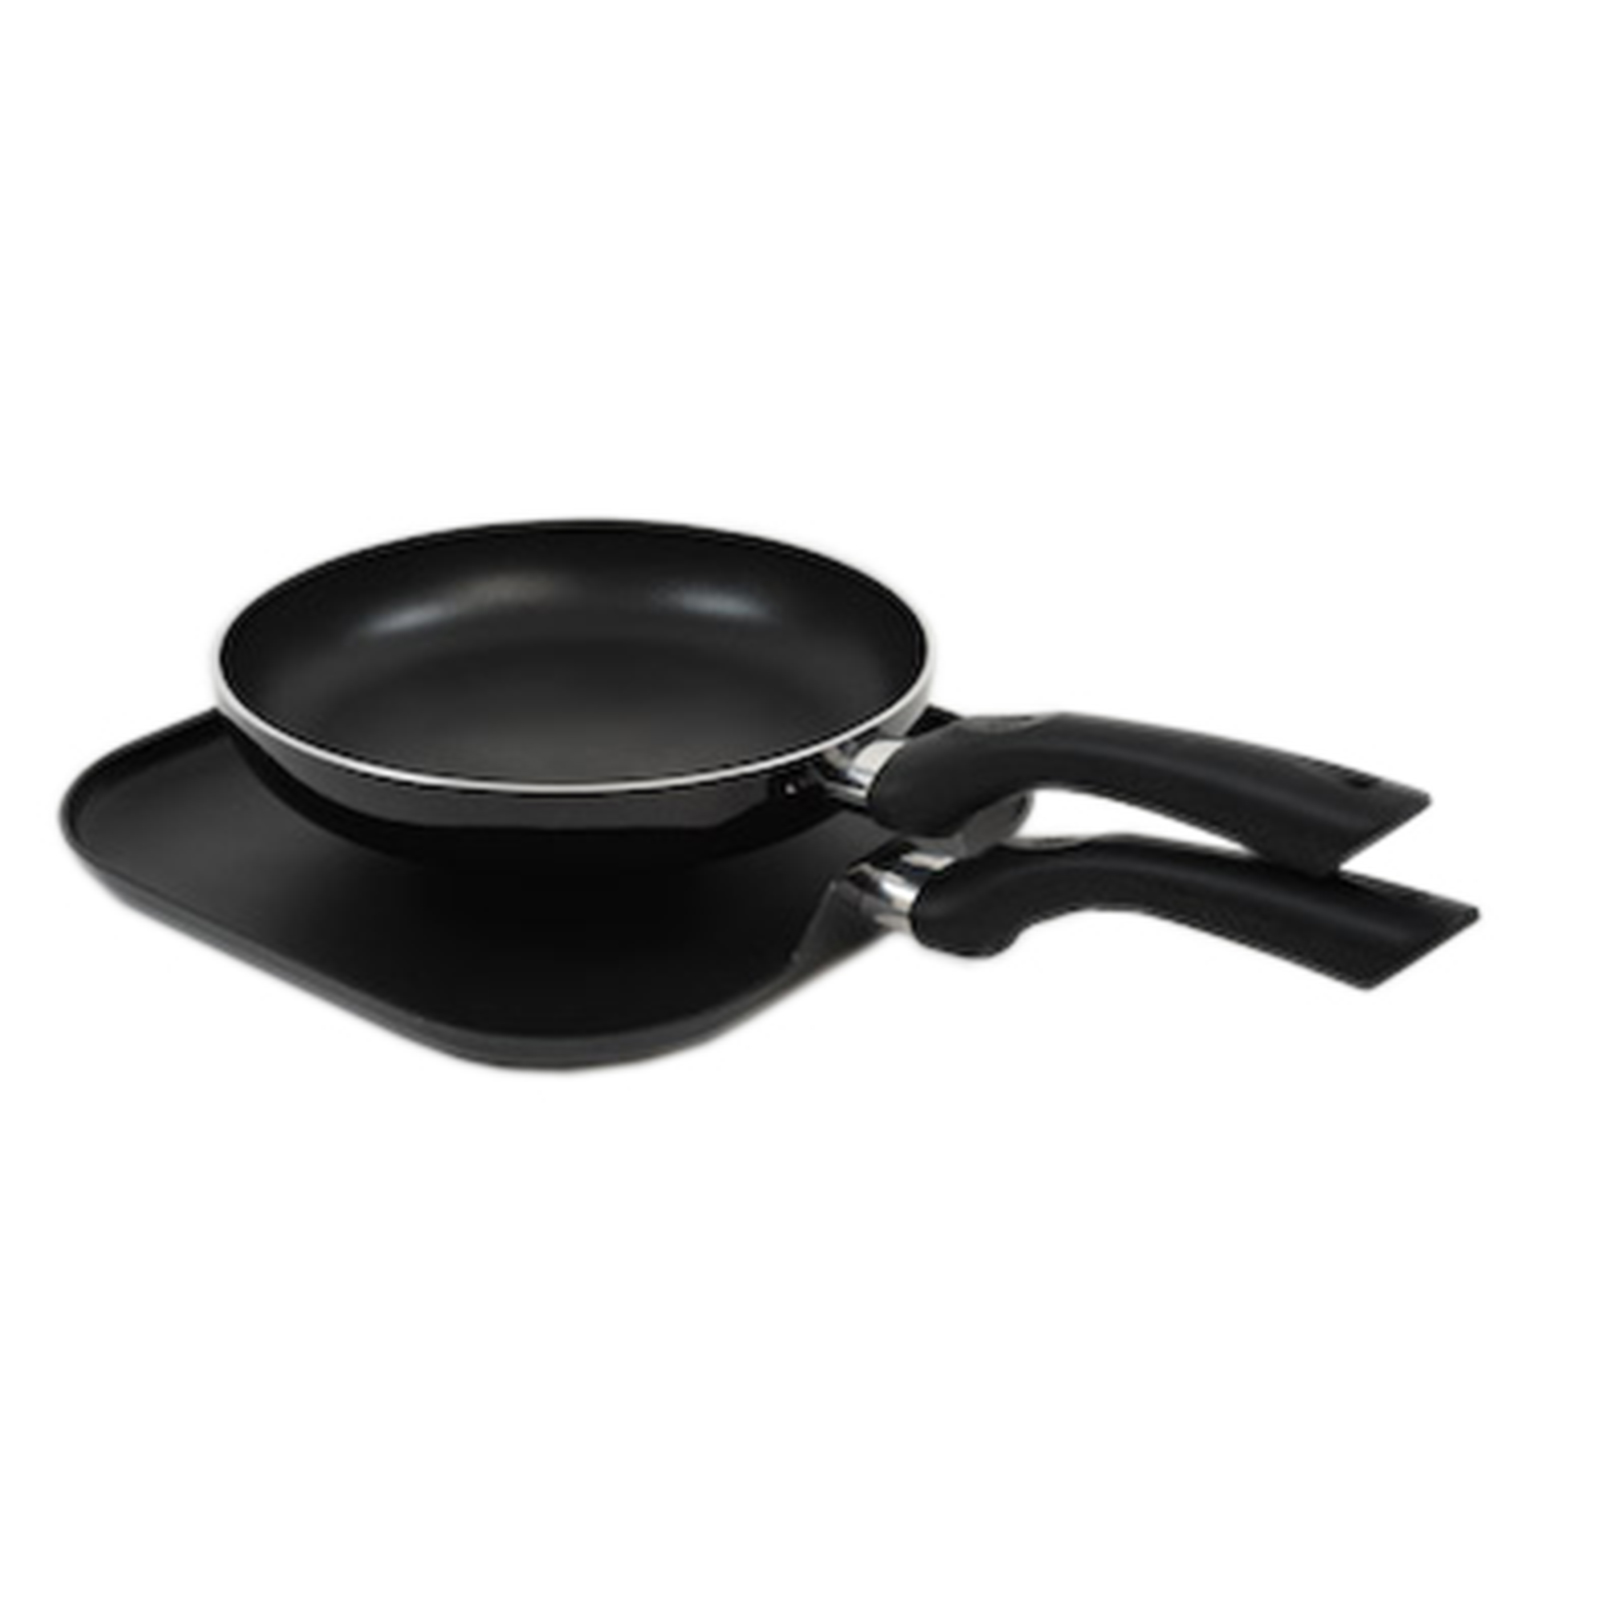 Artistry 2PC Cookware Set - Black